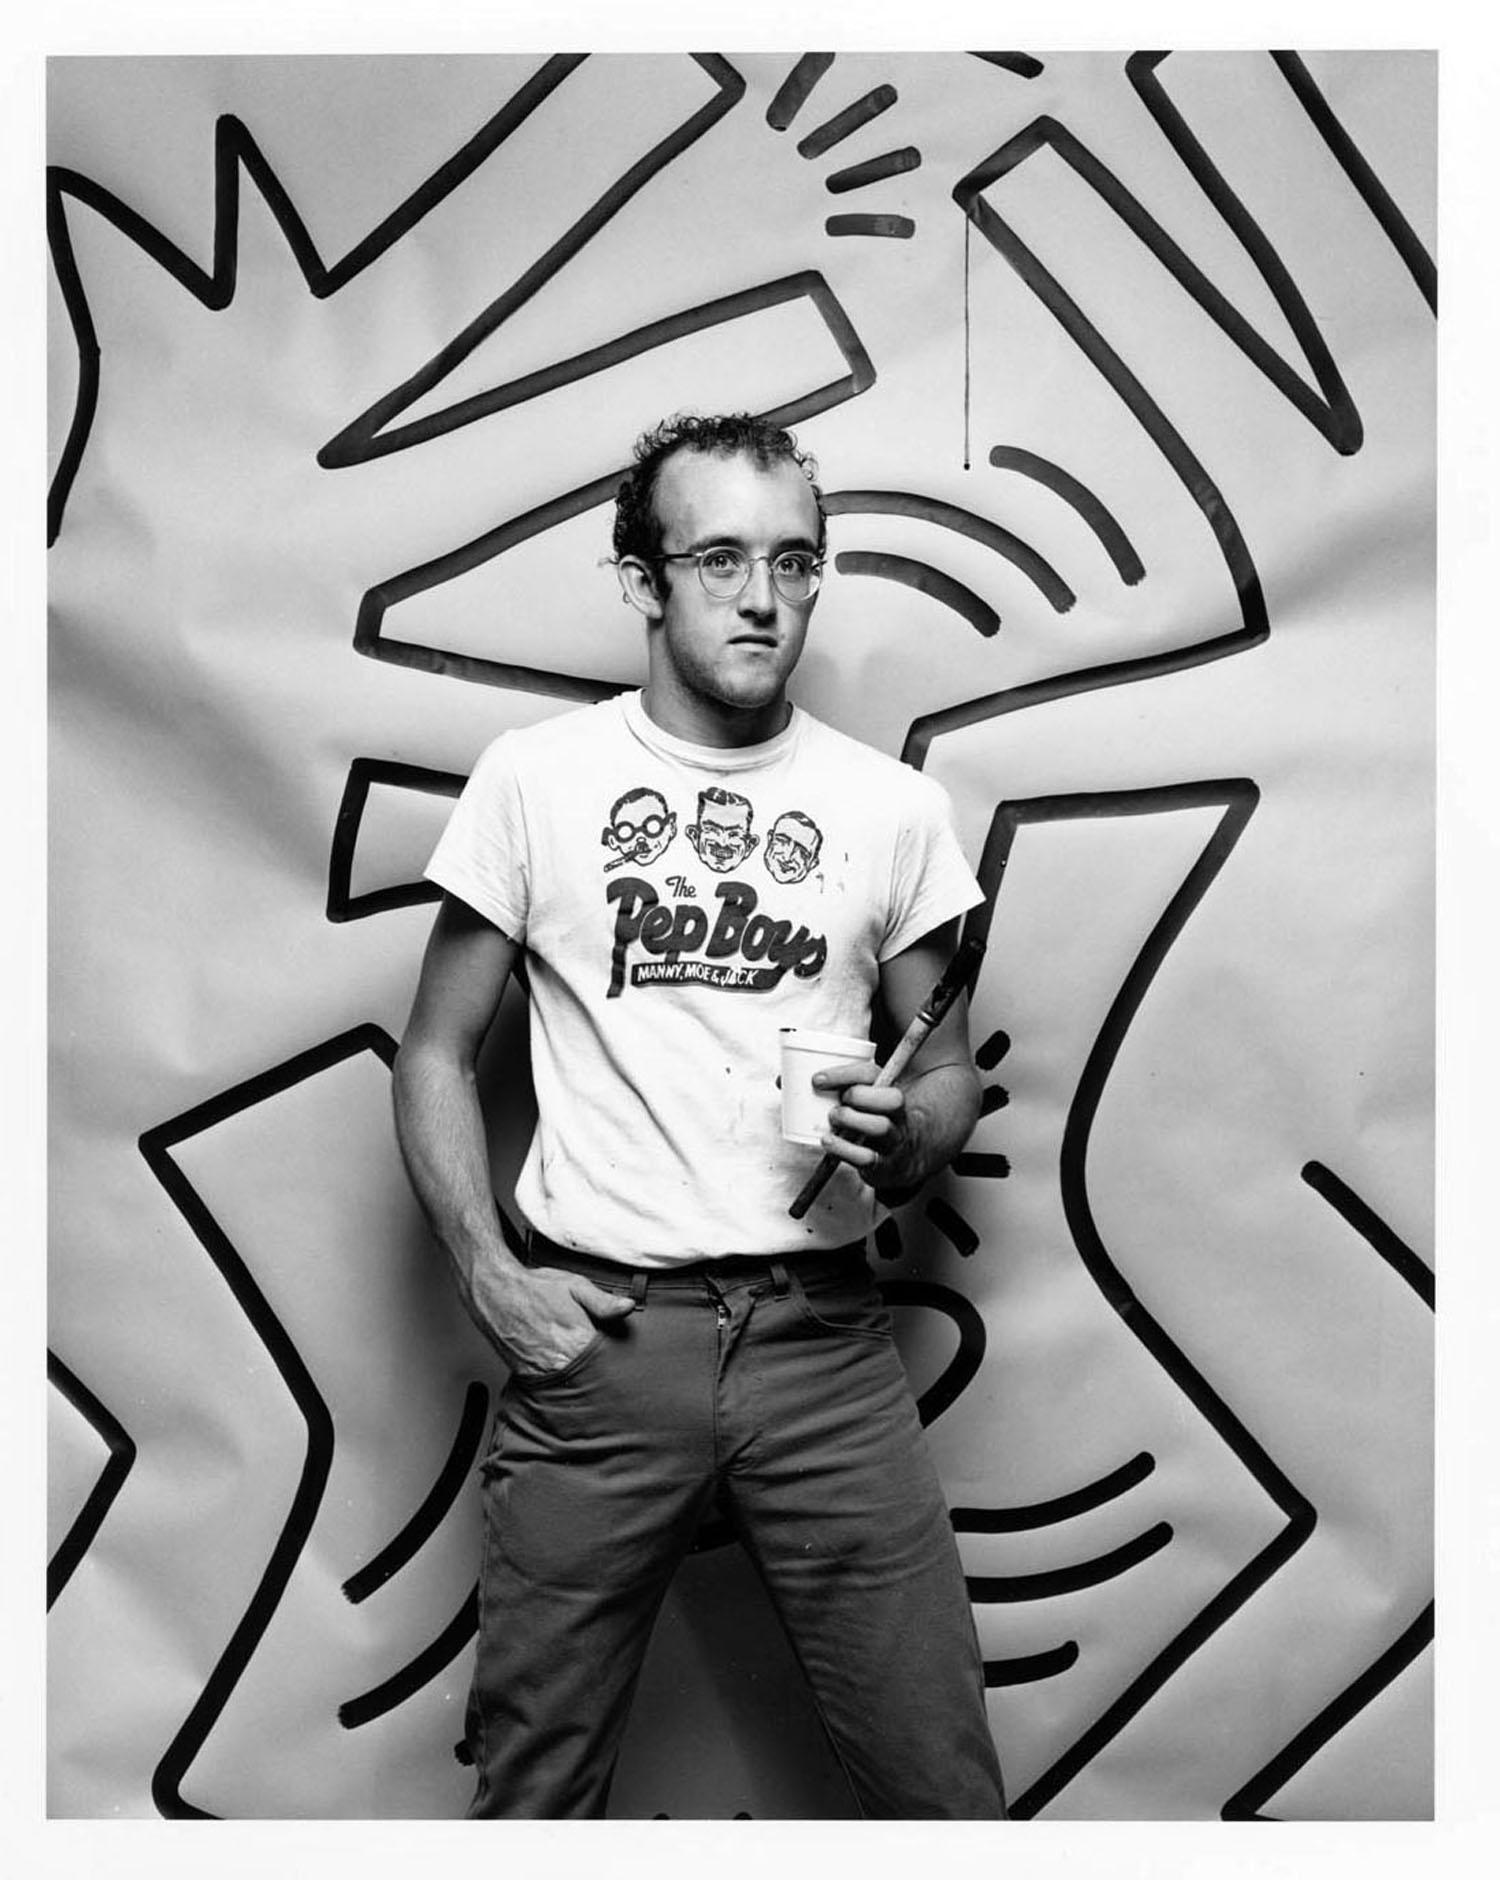 Black and White Photograph Jack Mitchell -  Graffiti Artist Keith Haring Studio Portrait with Just Completed Work (Portrait du studio de l'artiste graffiti Keith Haring avec l'œuvre qu'il vient de terminer)